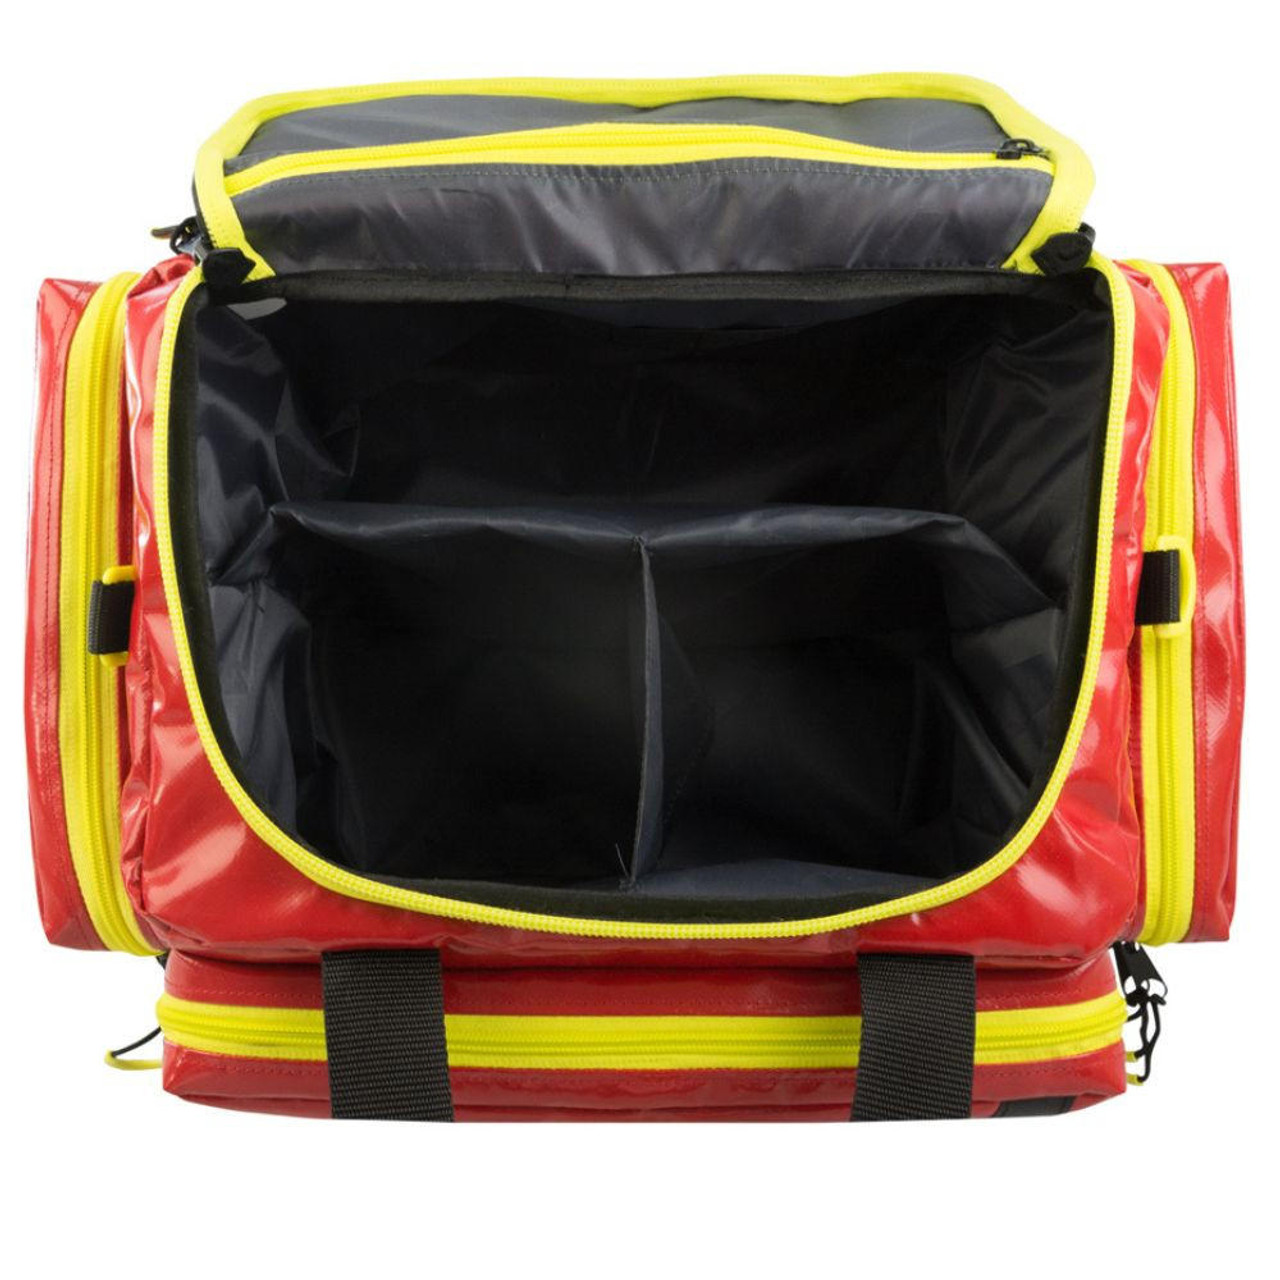 Aerocase Emergency Medical Bag Red Wipe Clean PVC Medium 18 Litre Empty 